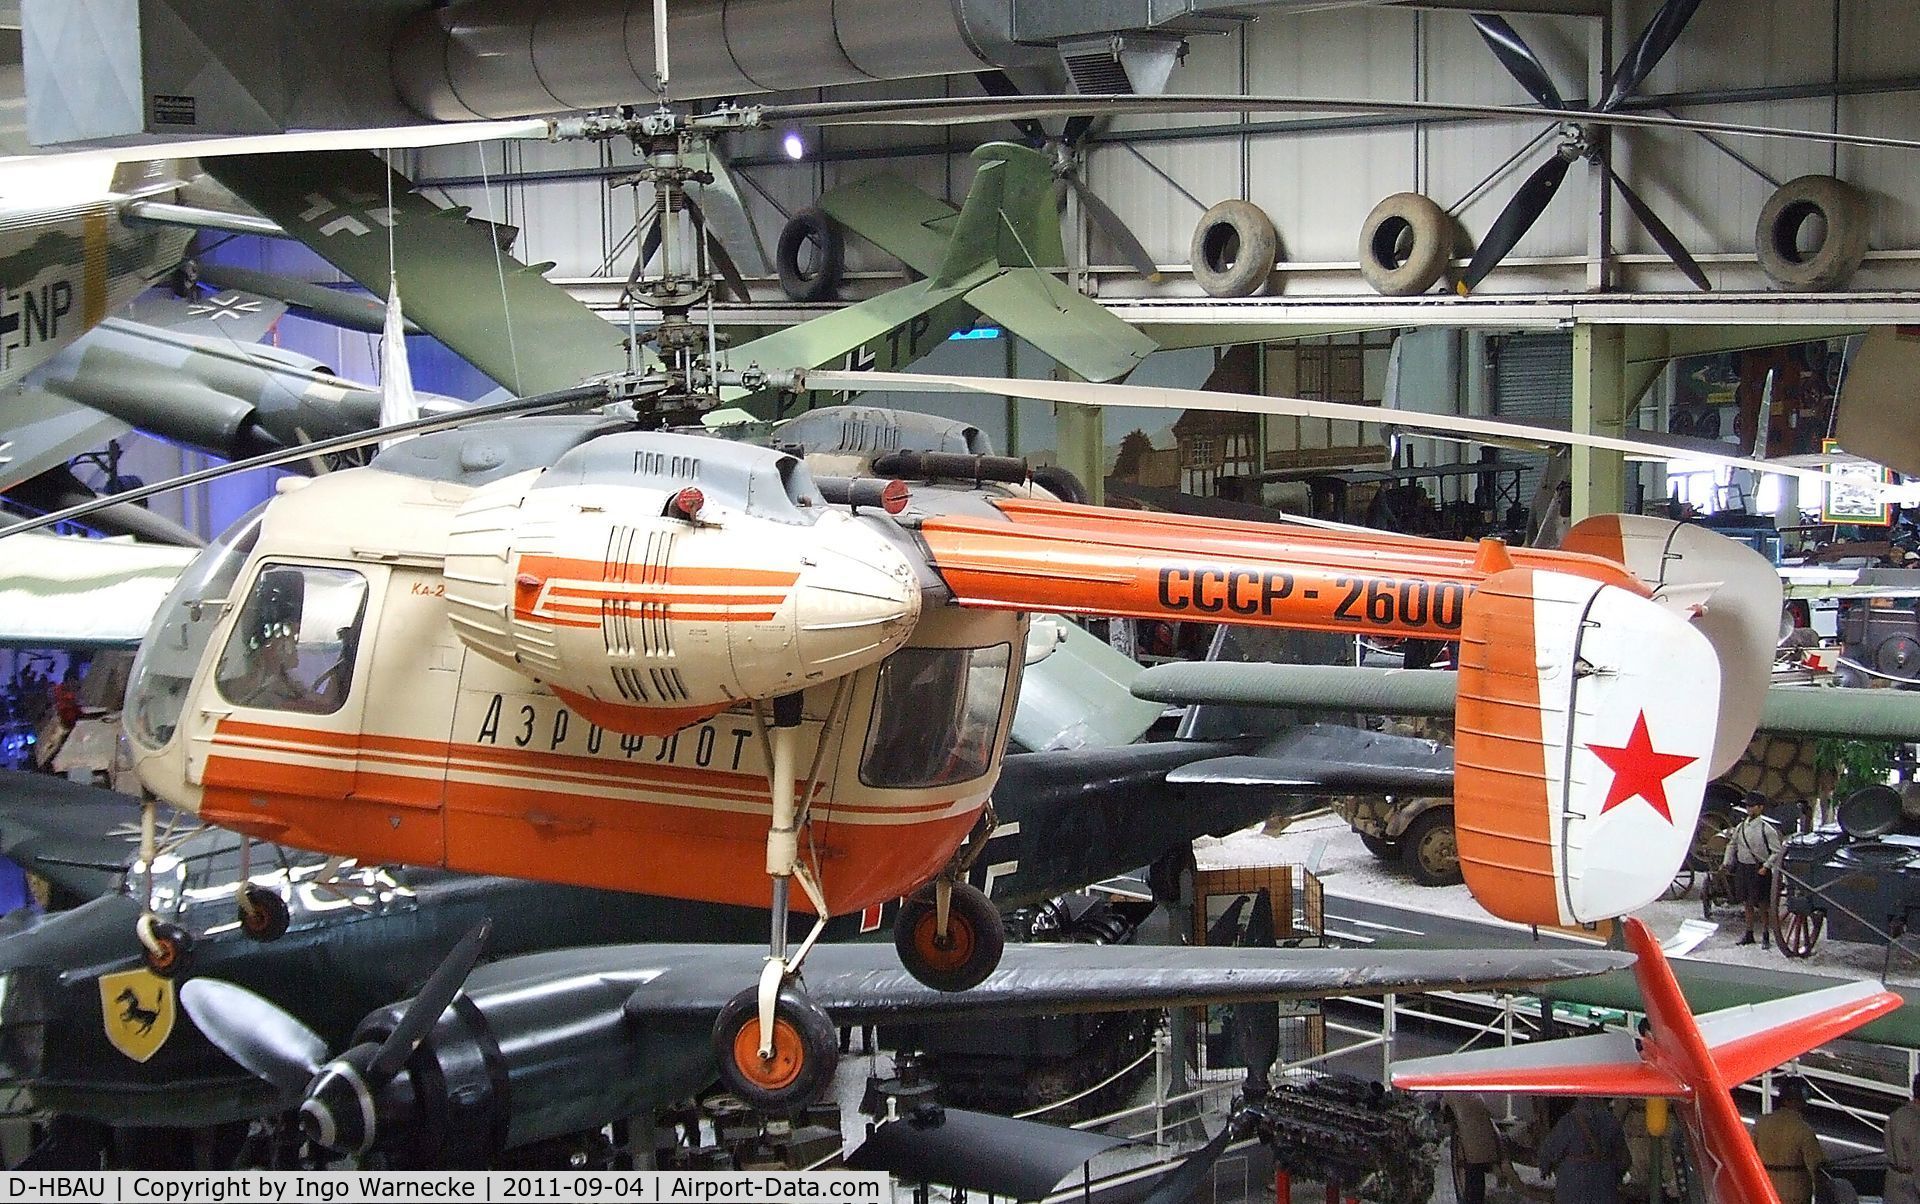 D-HBAU, 1973 Kamov Ka-26 Hoodlum C/N 7303204, Kamov Ka-26 Hoodlum at the Auto & Technik Museum, Sinsheim